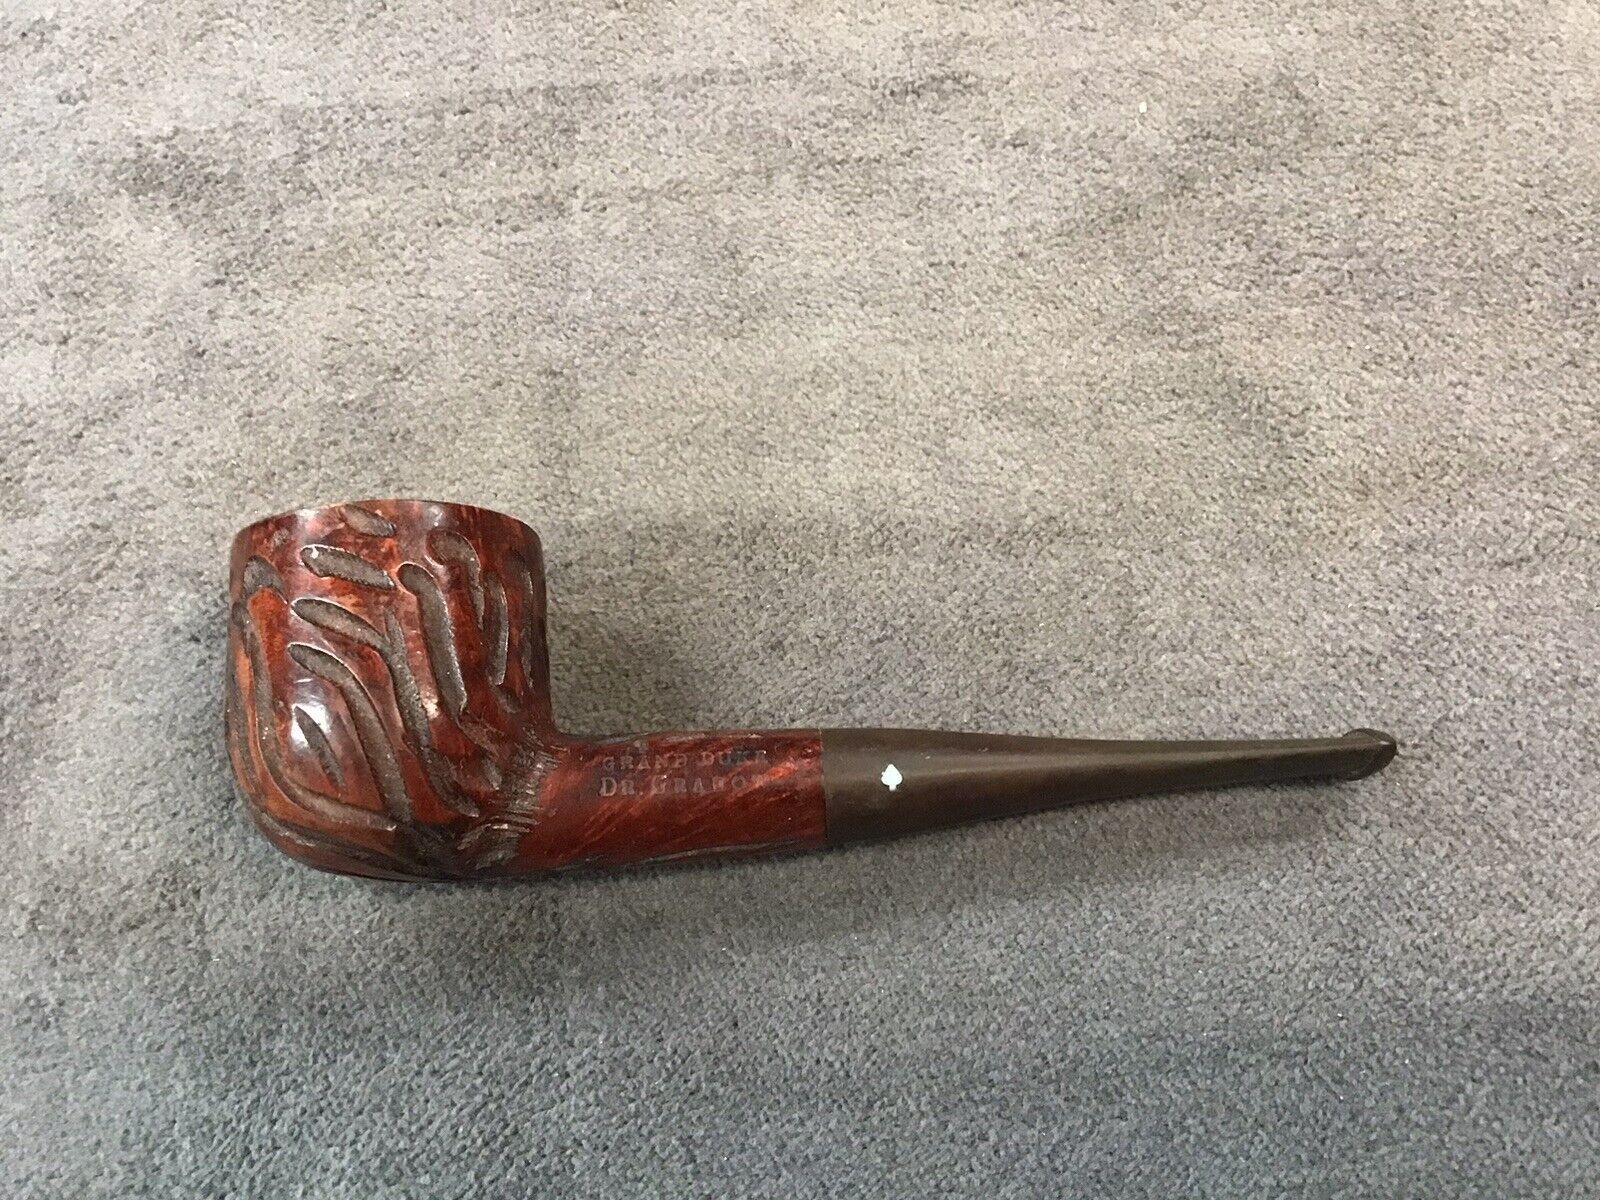 Dr Grabow Pipe, briar/ wood pipe, Vintage, Grand Duke